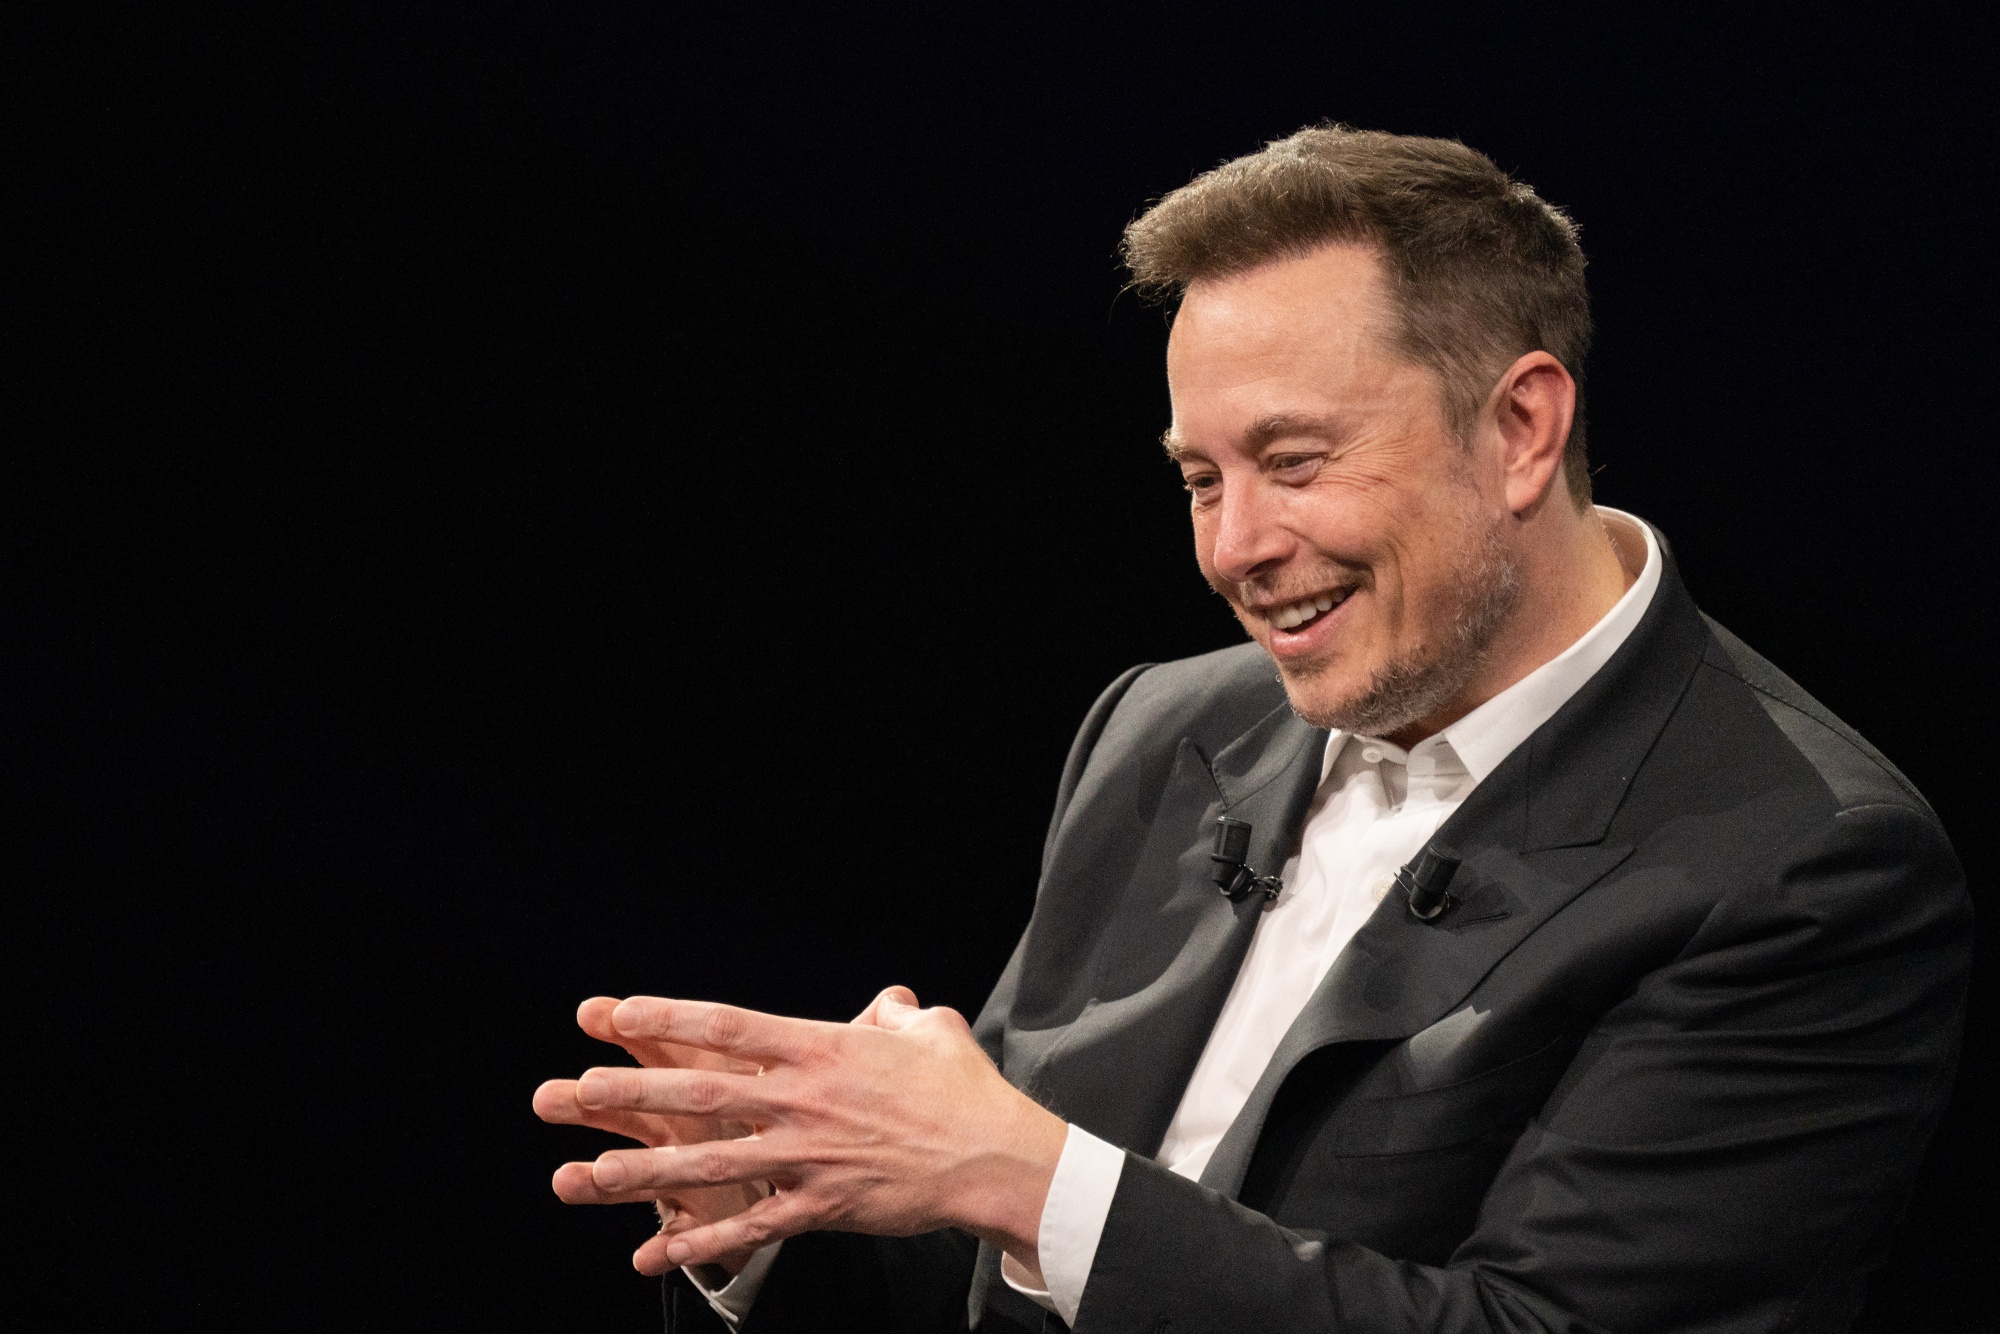 Elon Musk Tweets Neuralink Implanted in First Human Patient